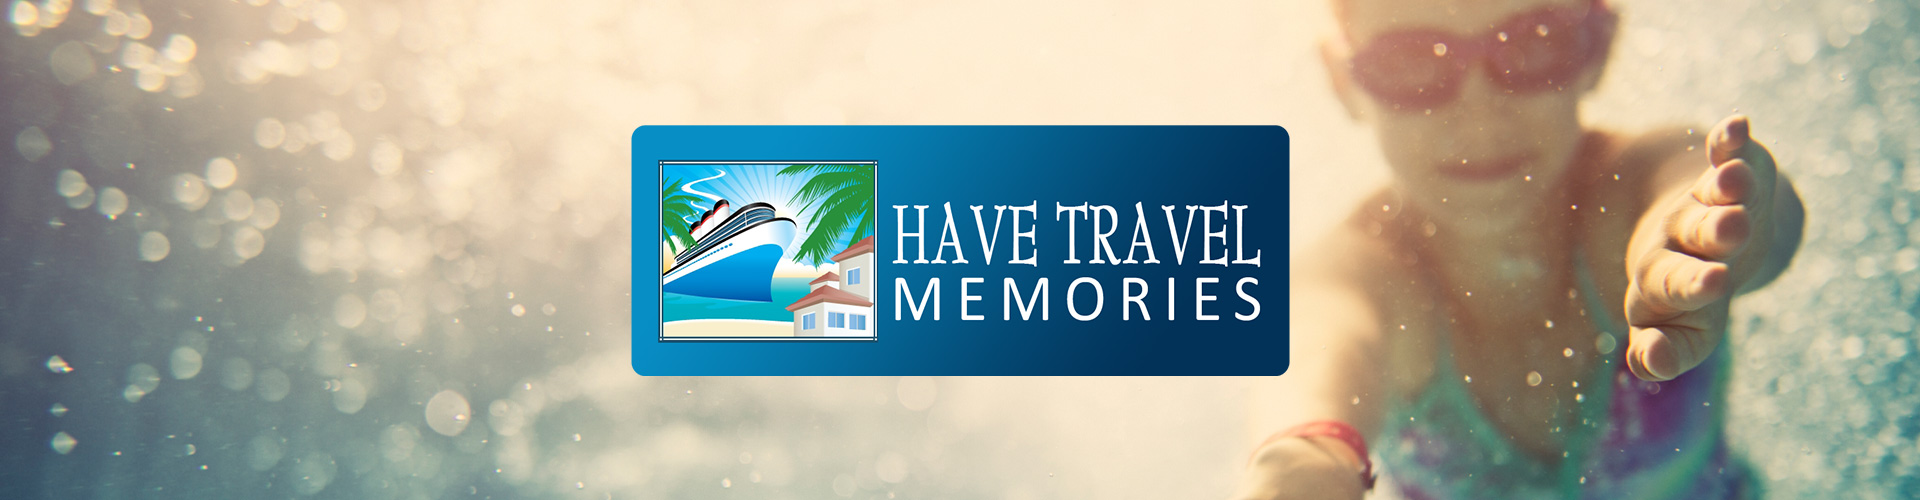 Have Travel Memories Banner